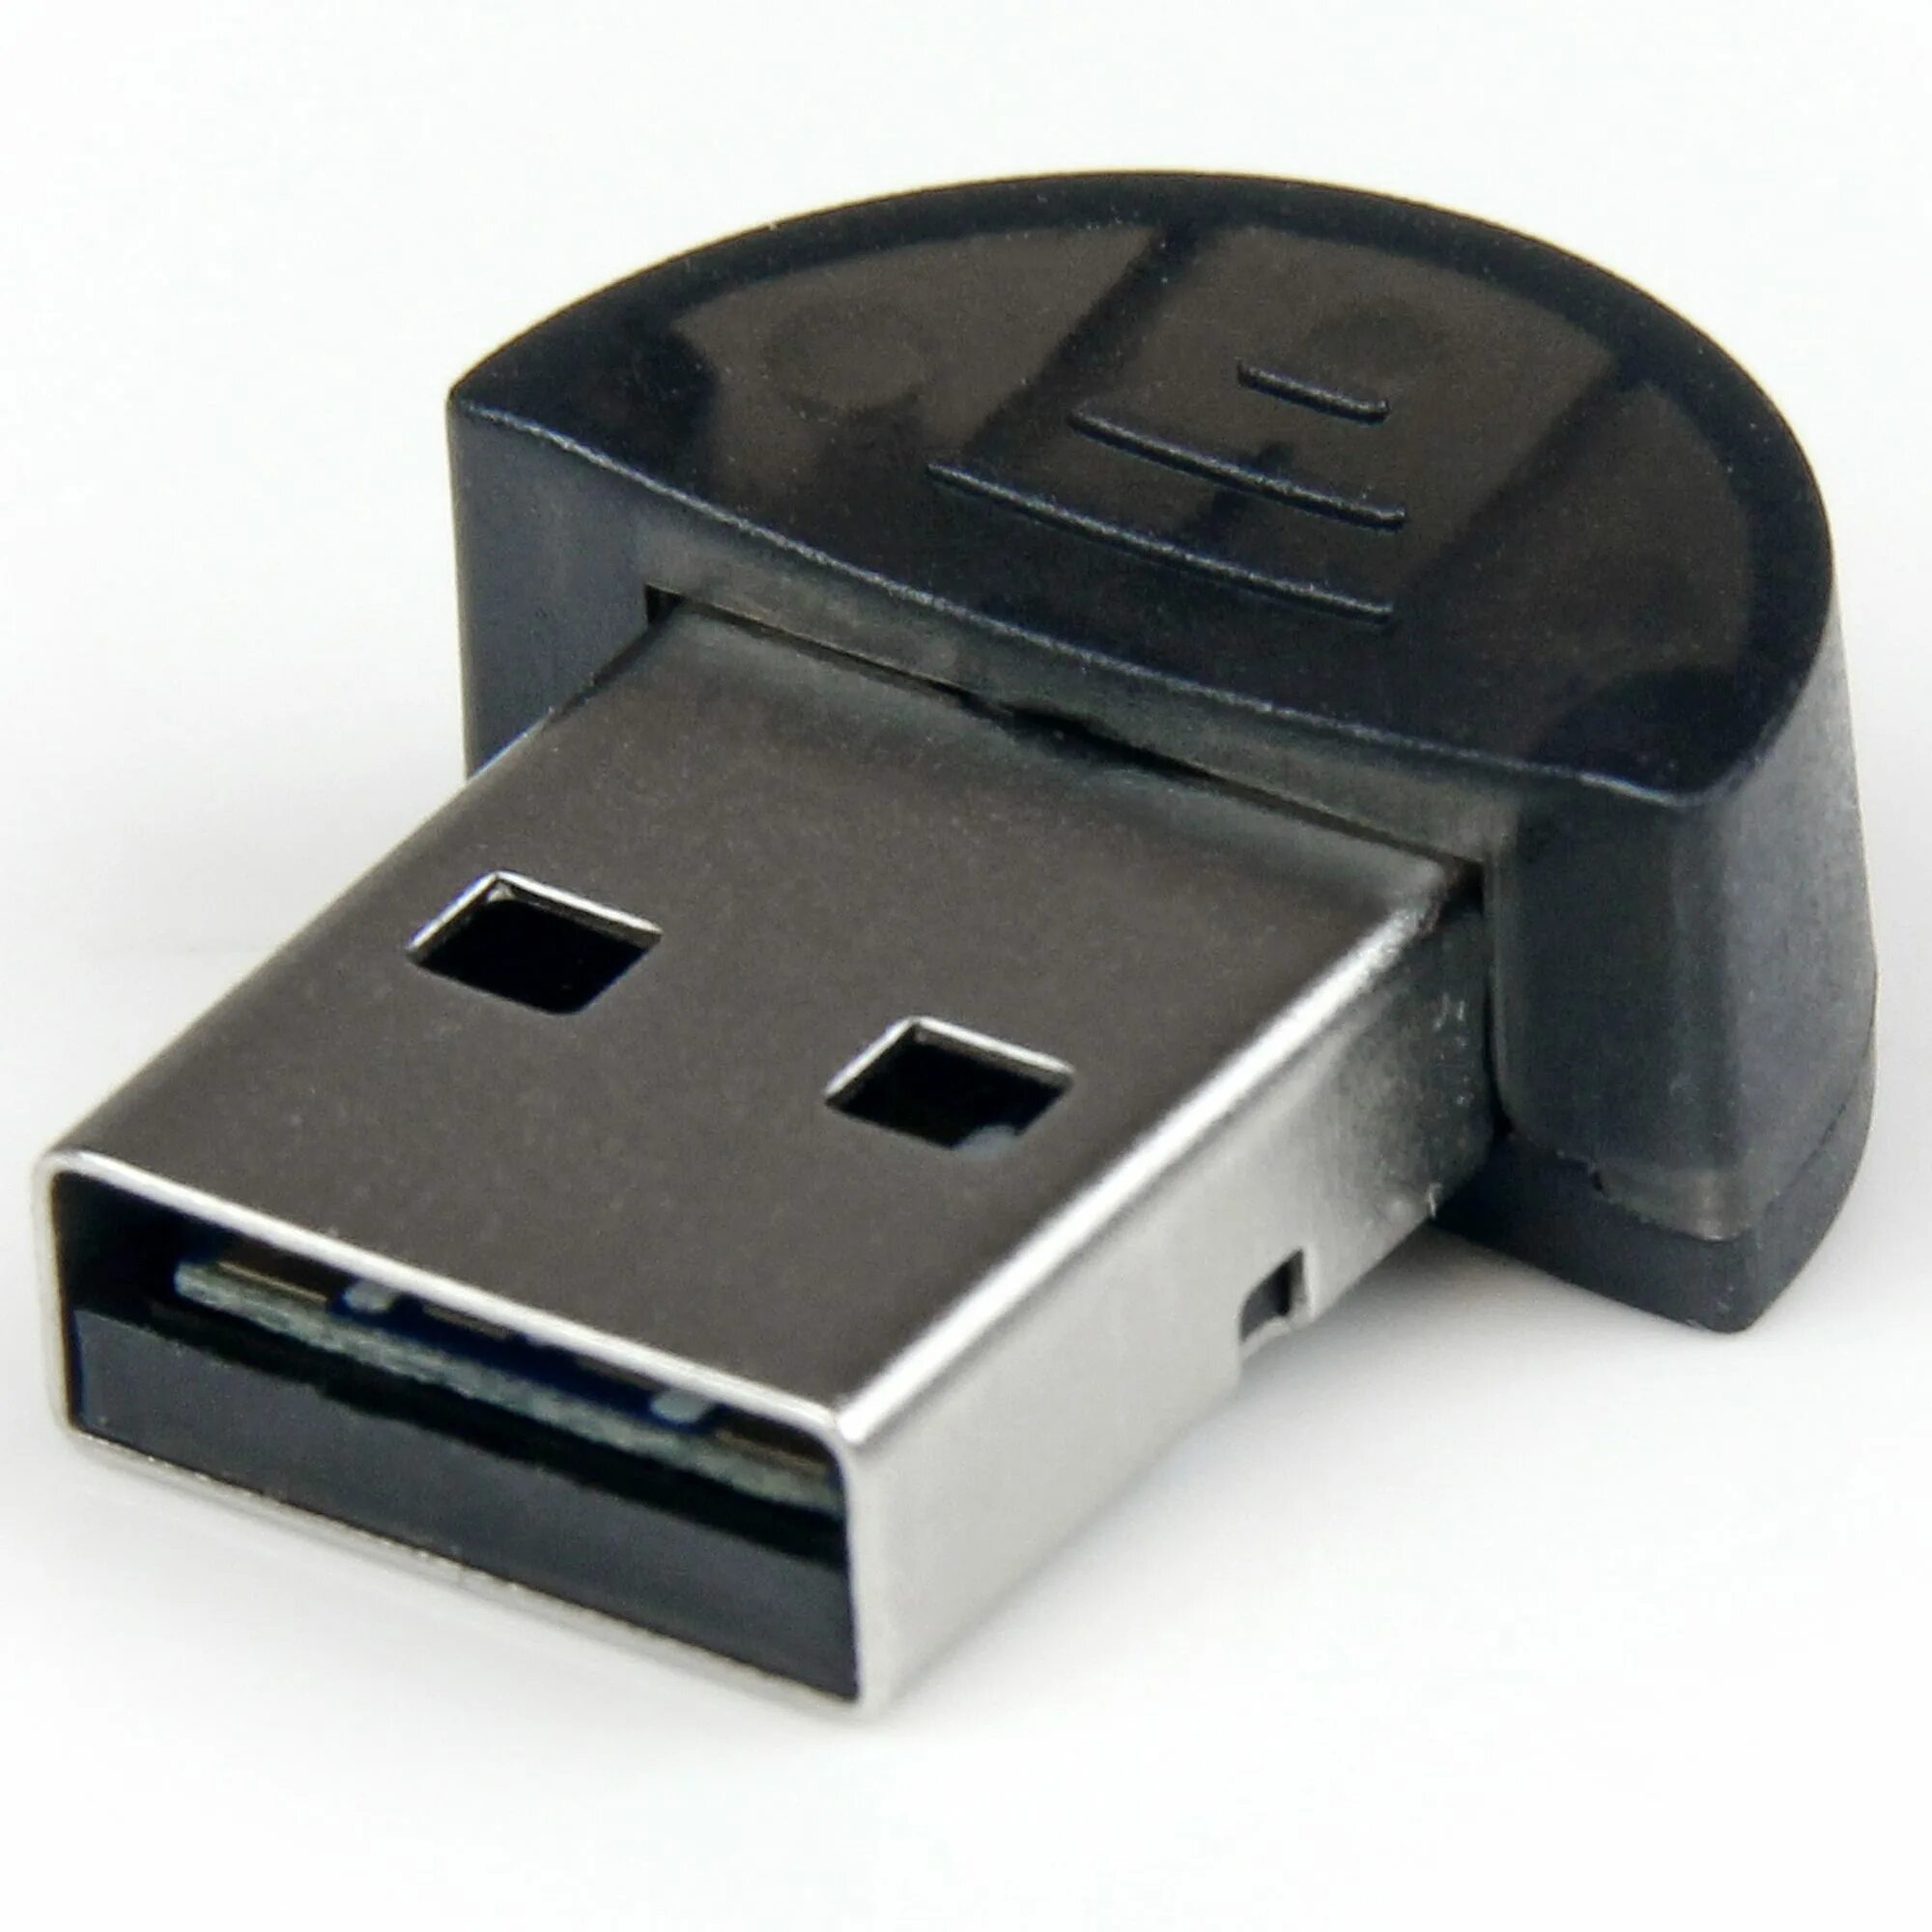 Адаптер Bluetooth 2.0+EDR USB. Адаптер Bluetooth USB 2.0 + EDR 015. Bluetooth 1.2 USB 1.1 Dongle адаптер. Мини USB Bluetooth адаптер v 2,0. Купить bluetooth флешку